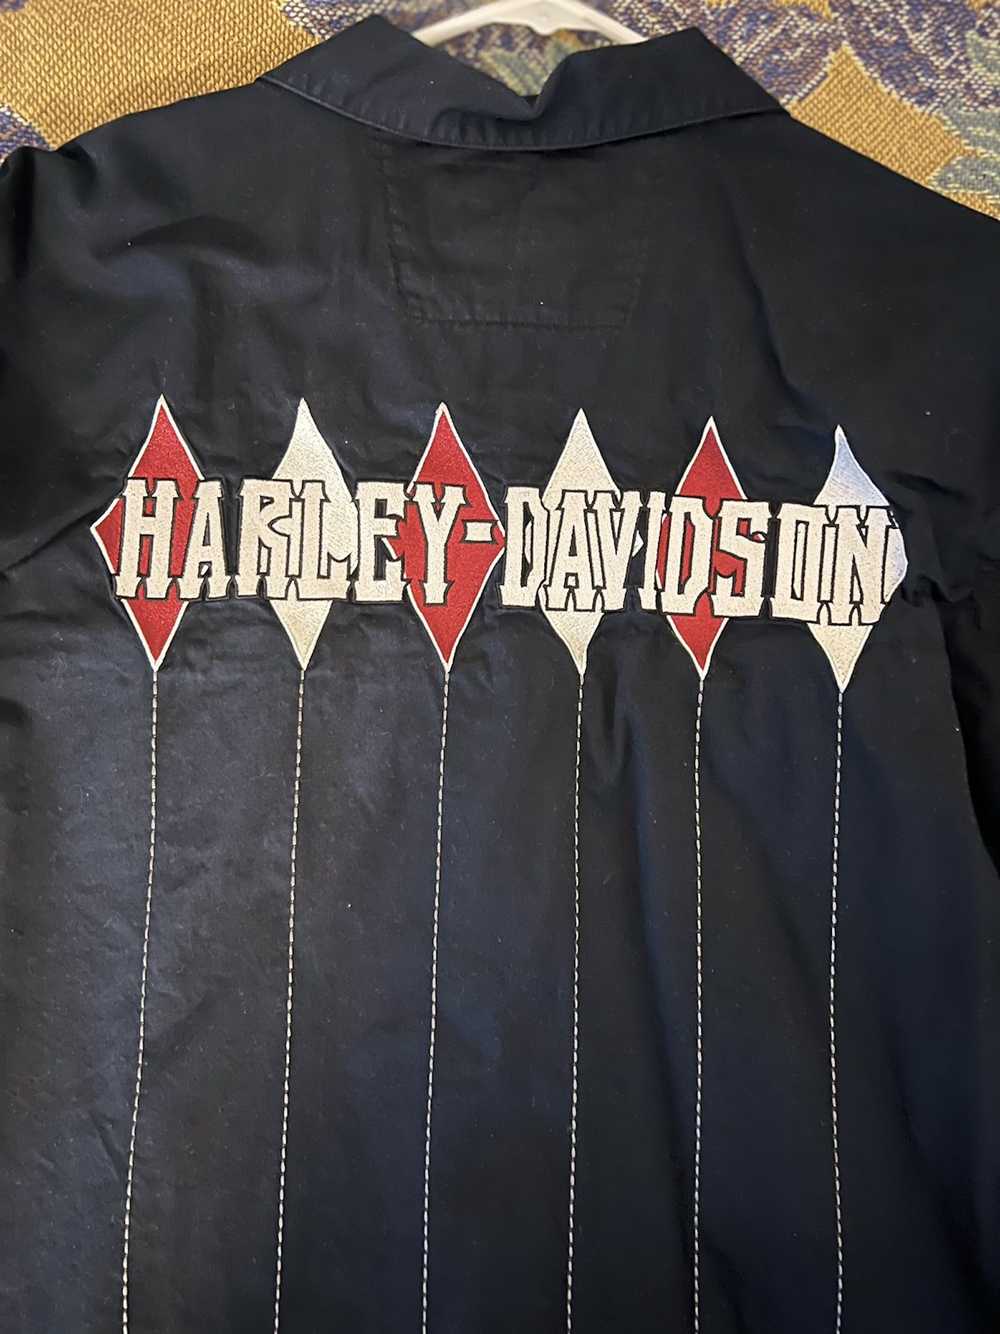 Harley Davidson Harley Davidson bowling shirt - image 4